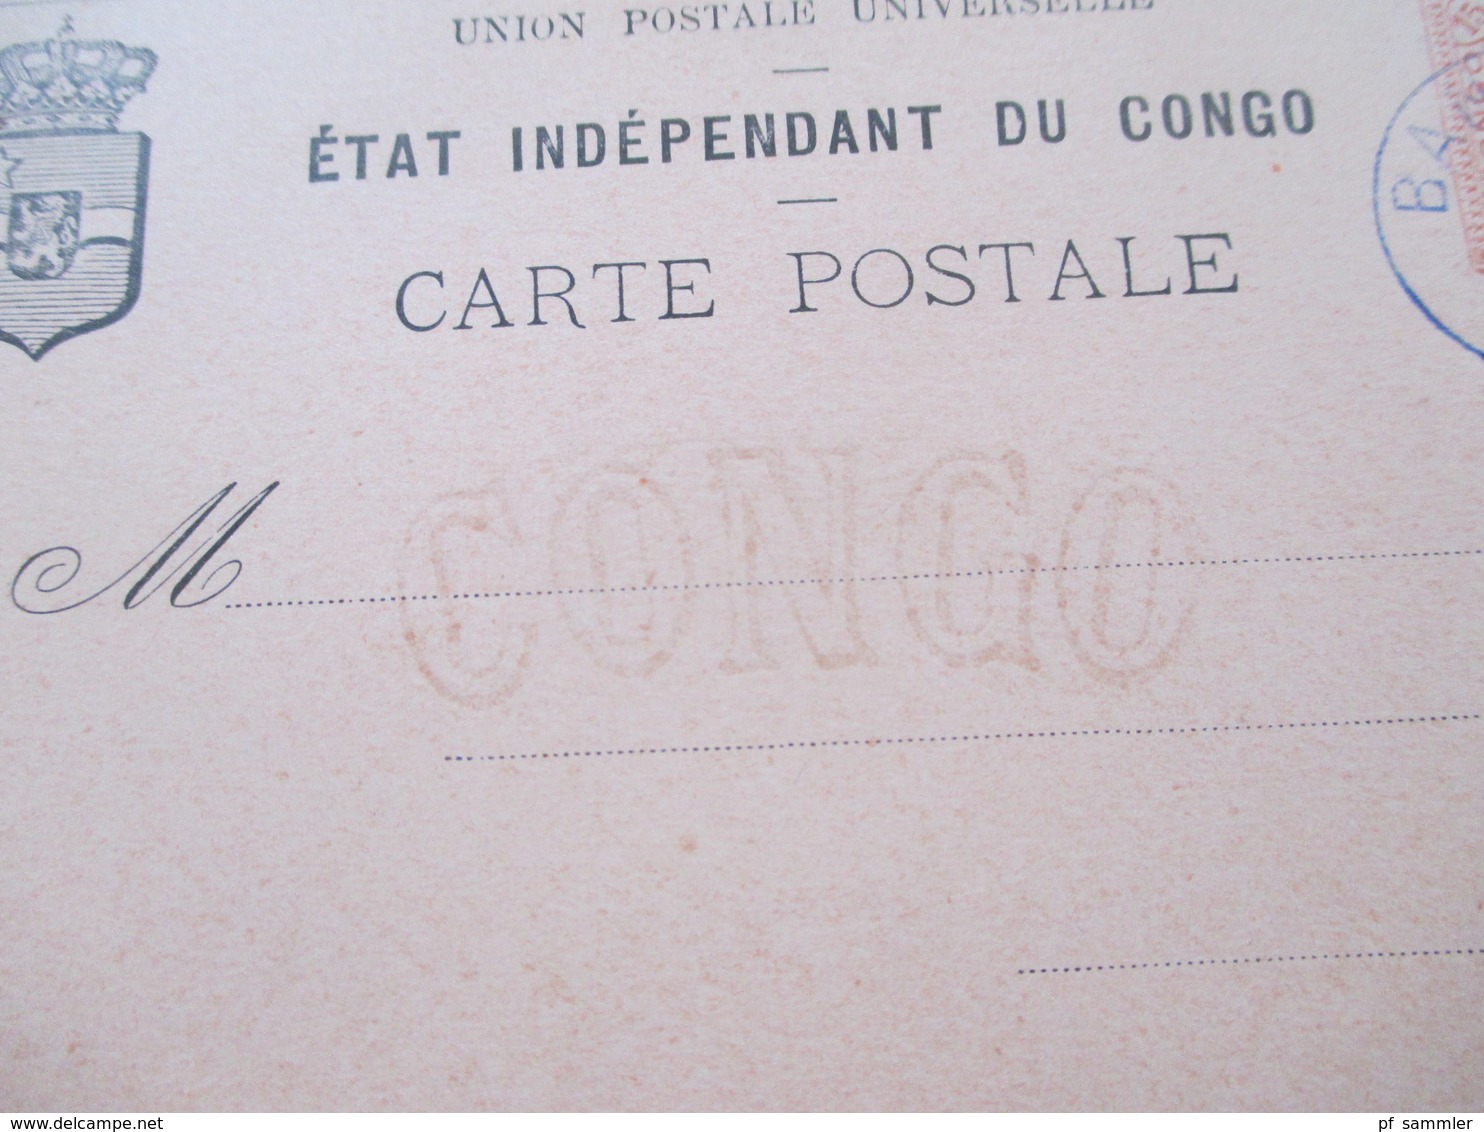 Belgisch - Kongo Ganzsache Mit Blauem Stempel! Banana 1888 Aber Ungelaufen / Blankokarte. Etat Independant Du Congo - Covers & Documents